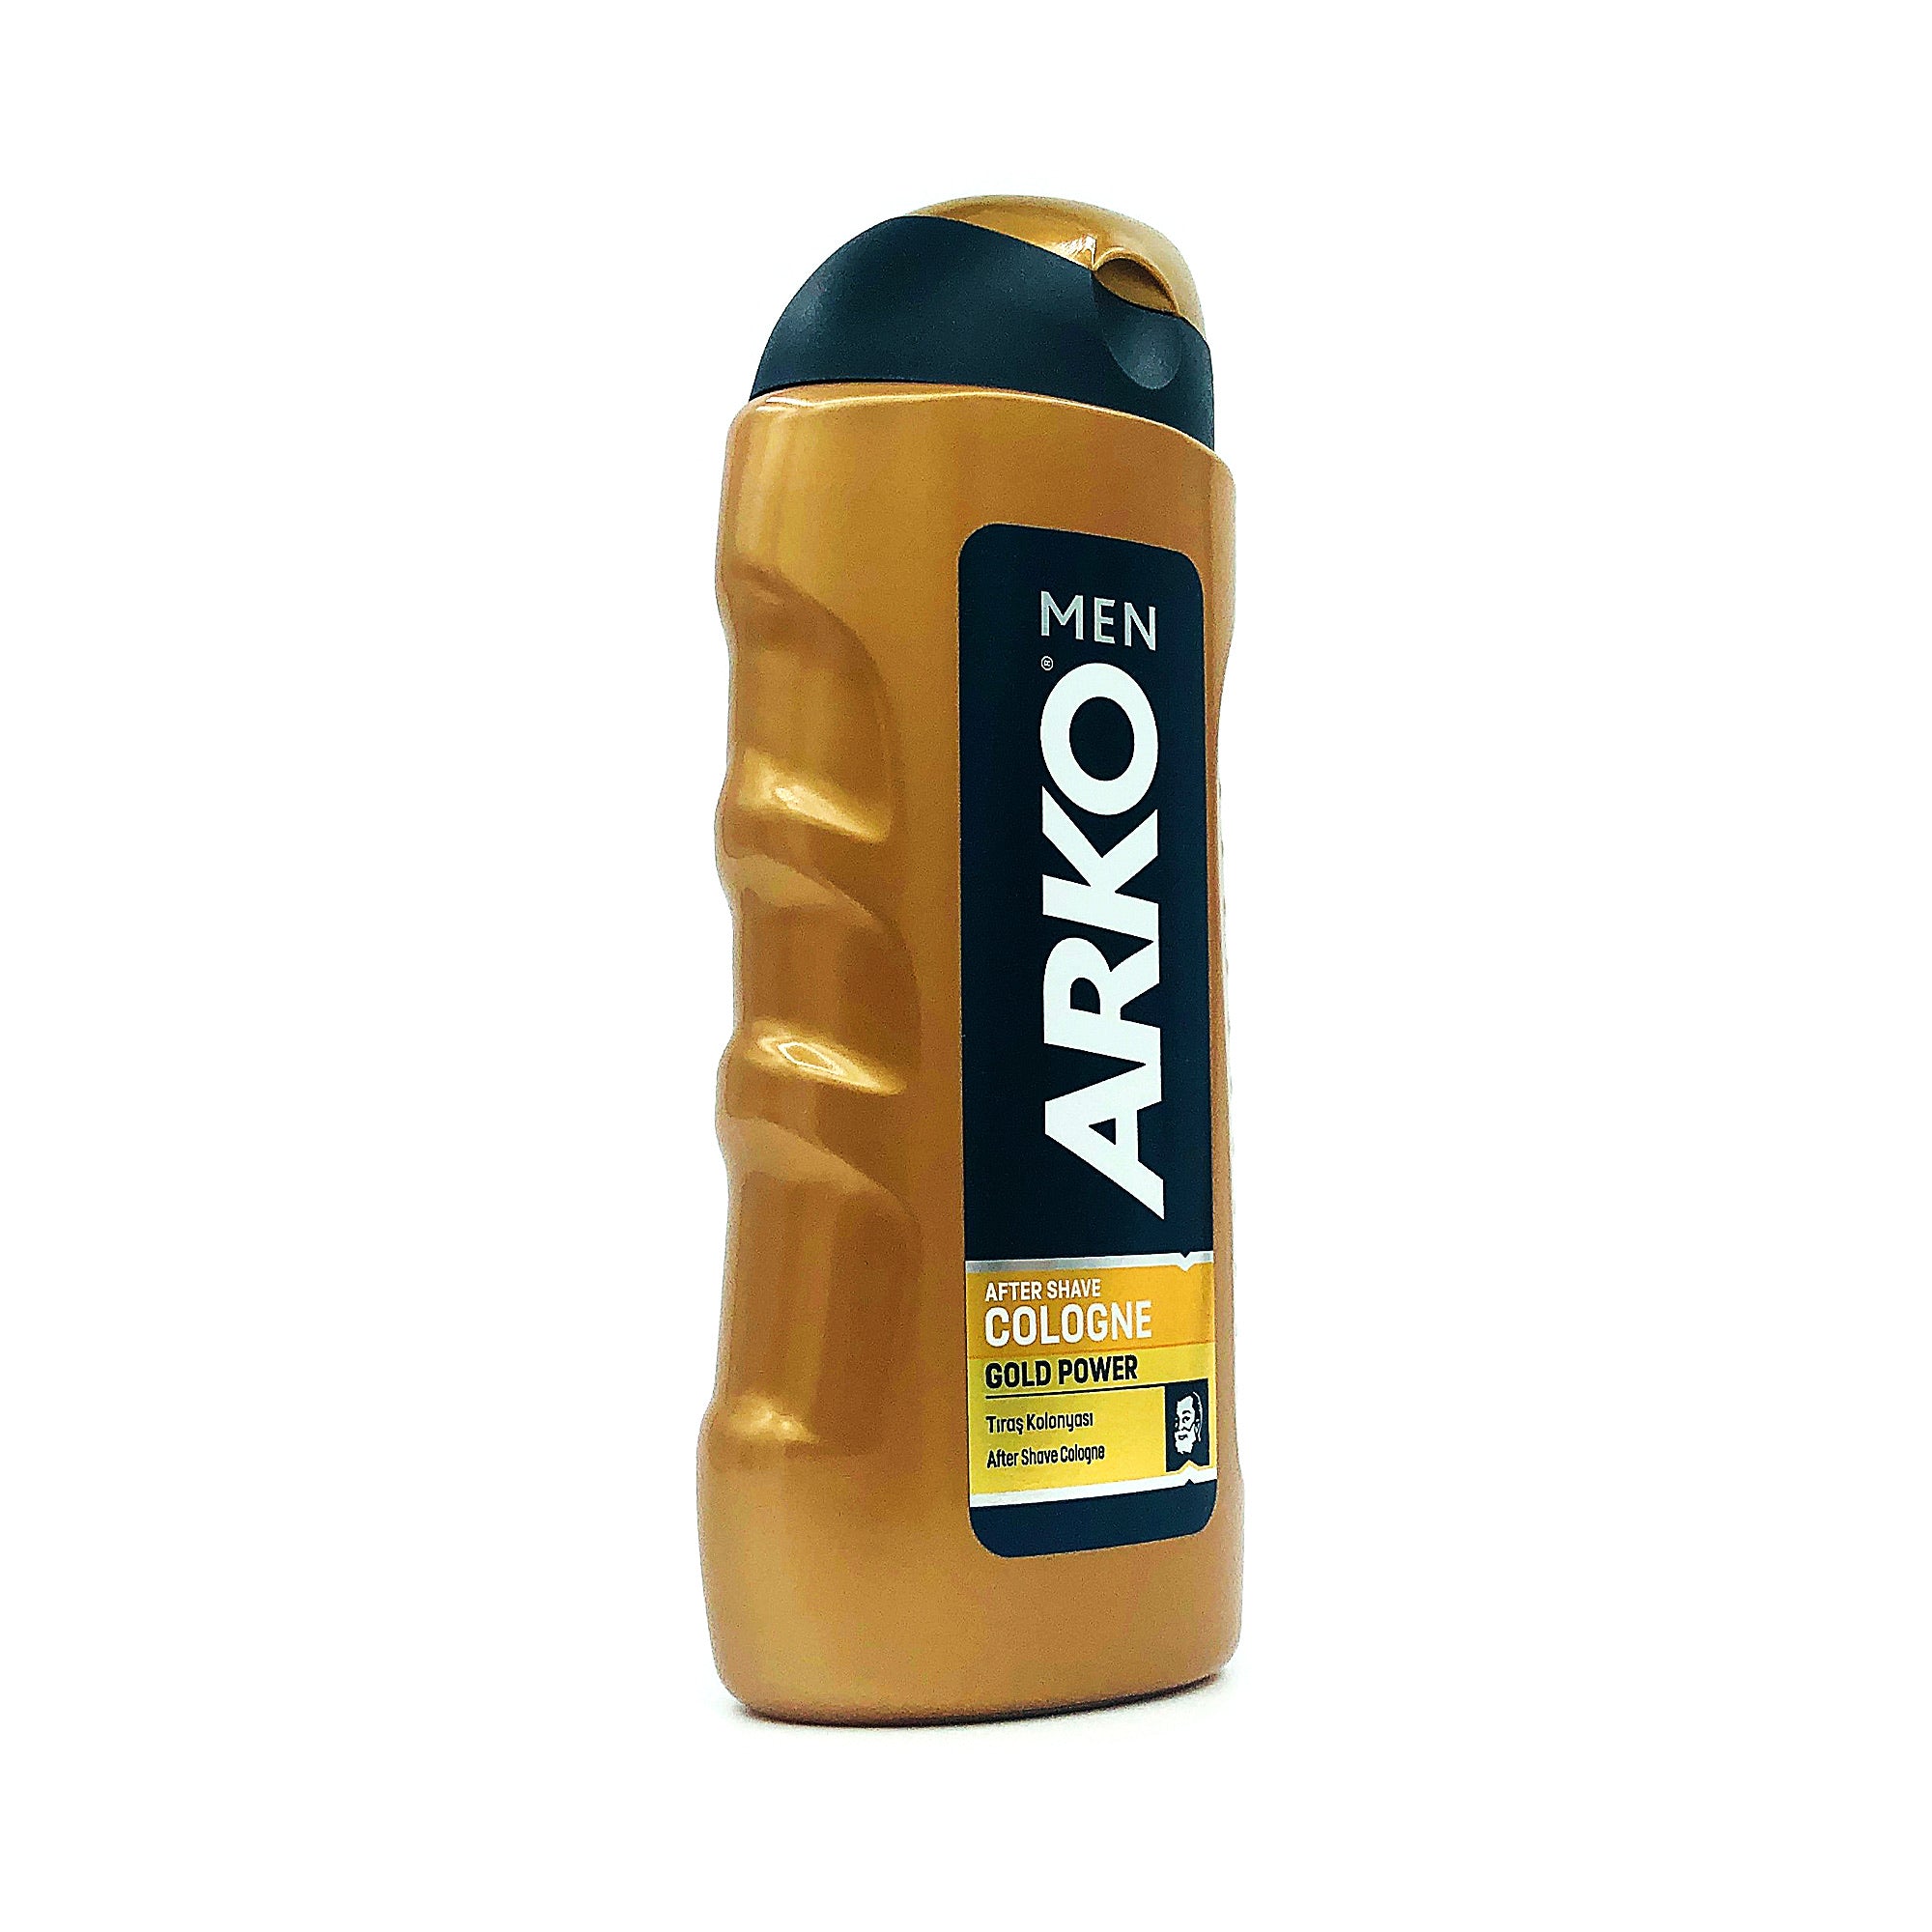 Arko - Men Aftershave Cologne Gold Power 250ml - Eson Direct